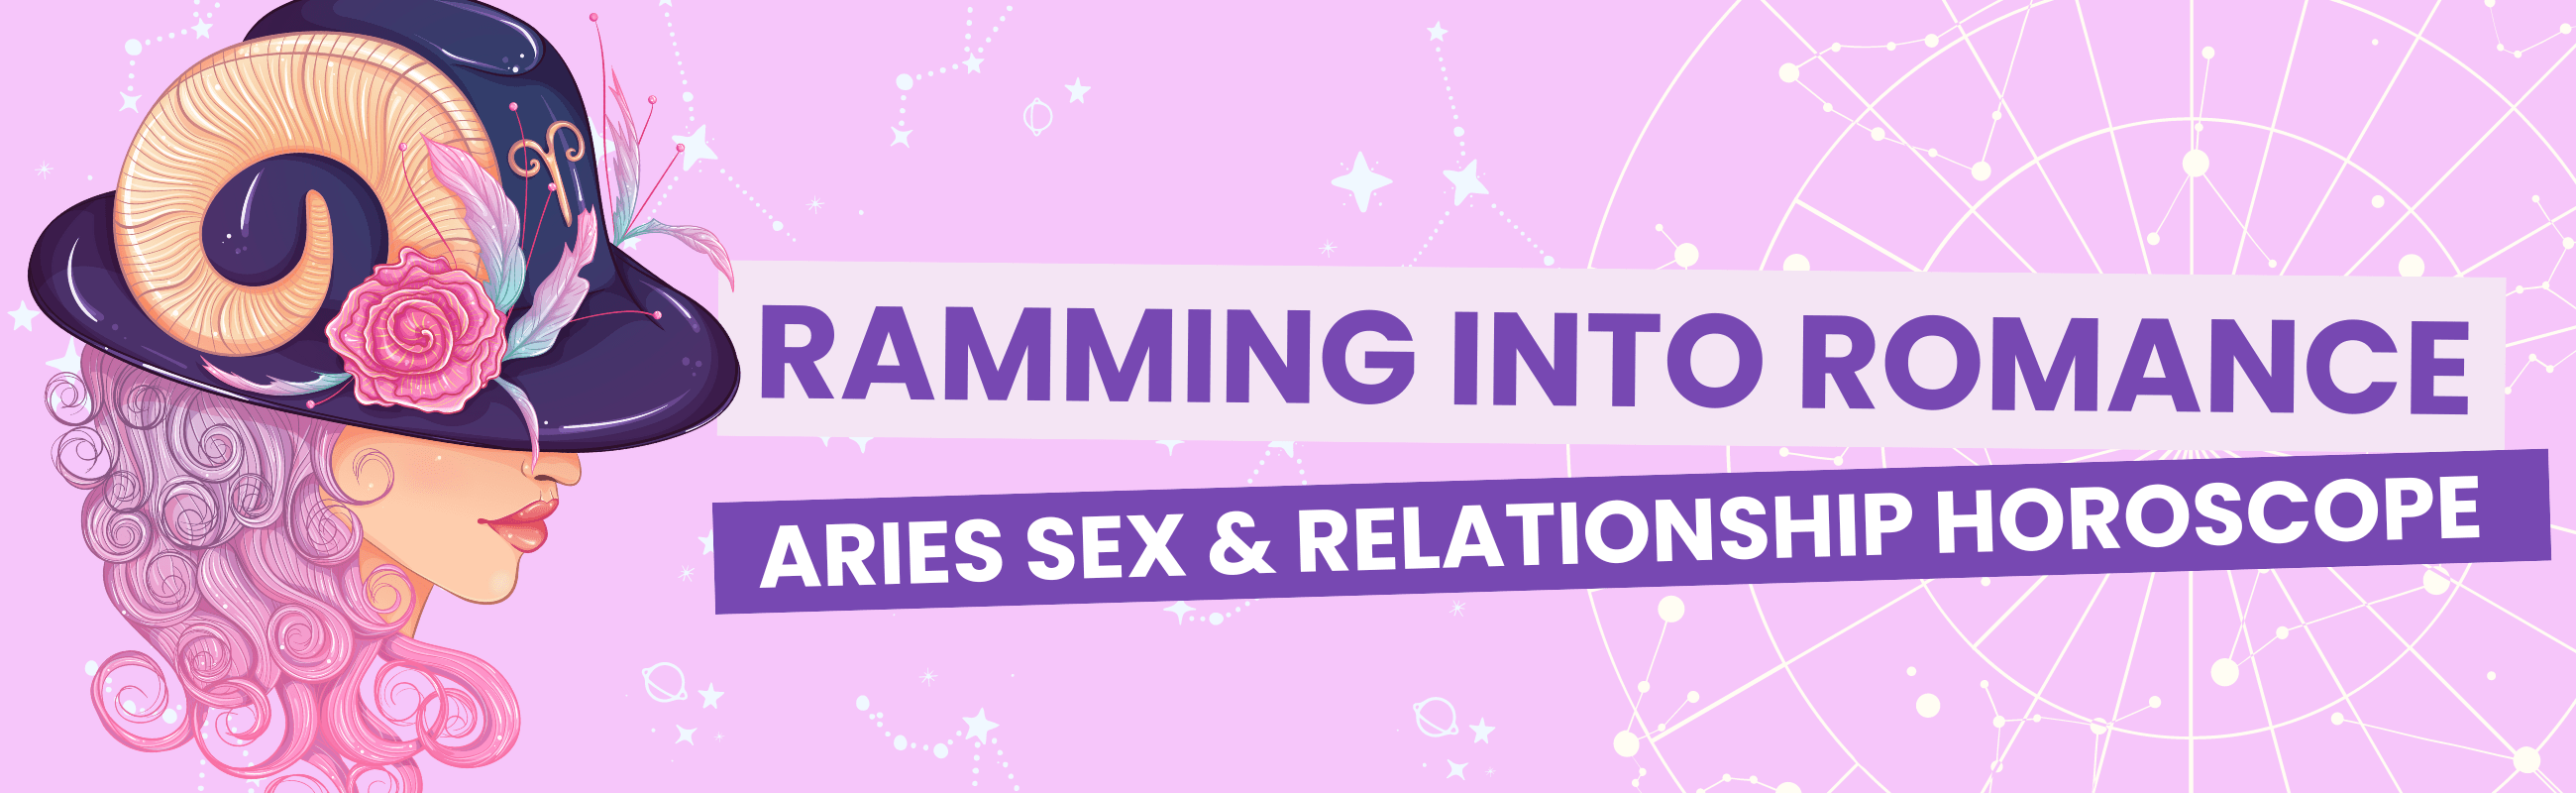 Ramming into romance: Aries sex & relationship horoscope